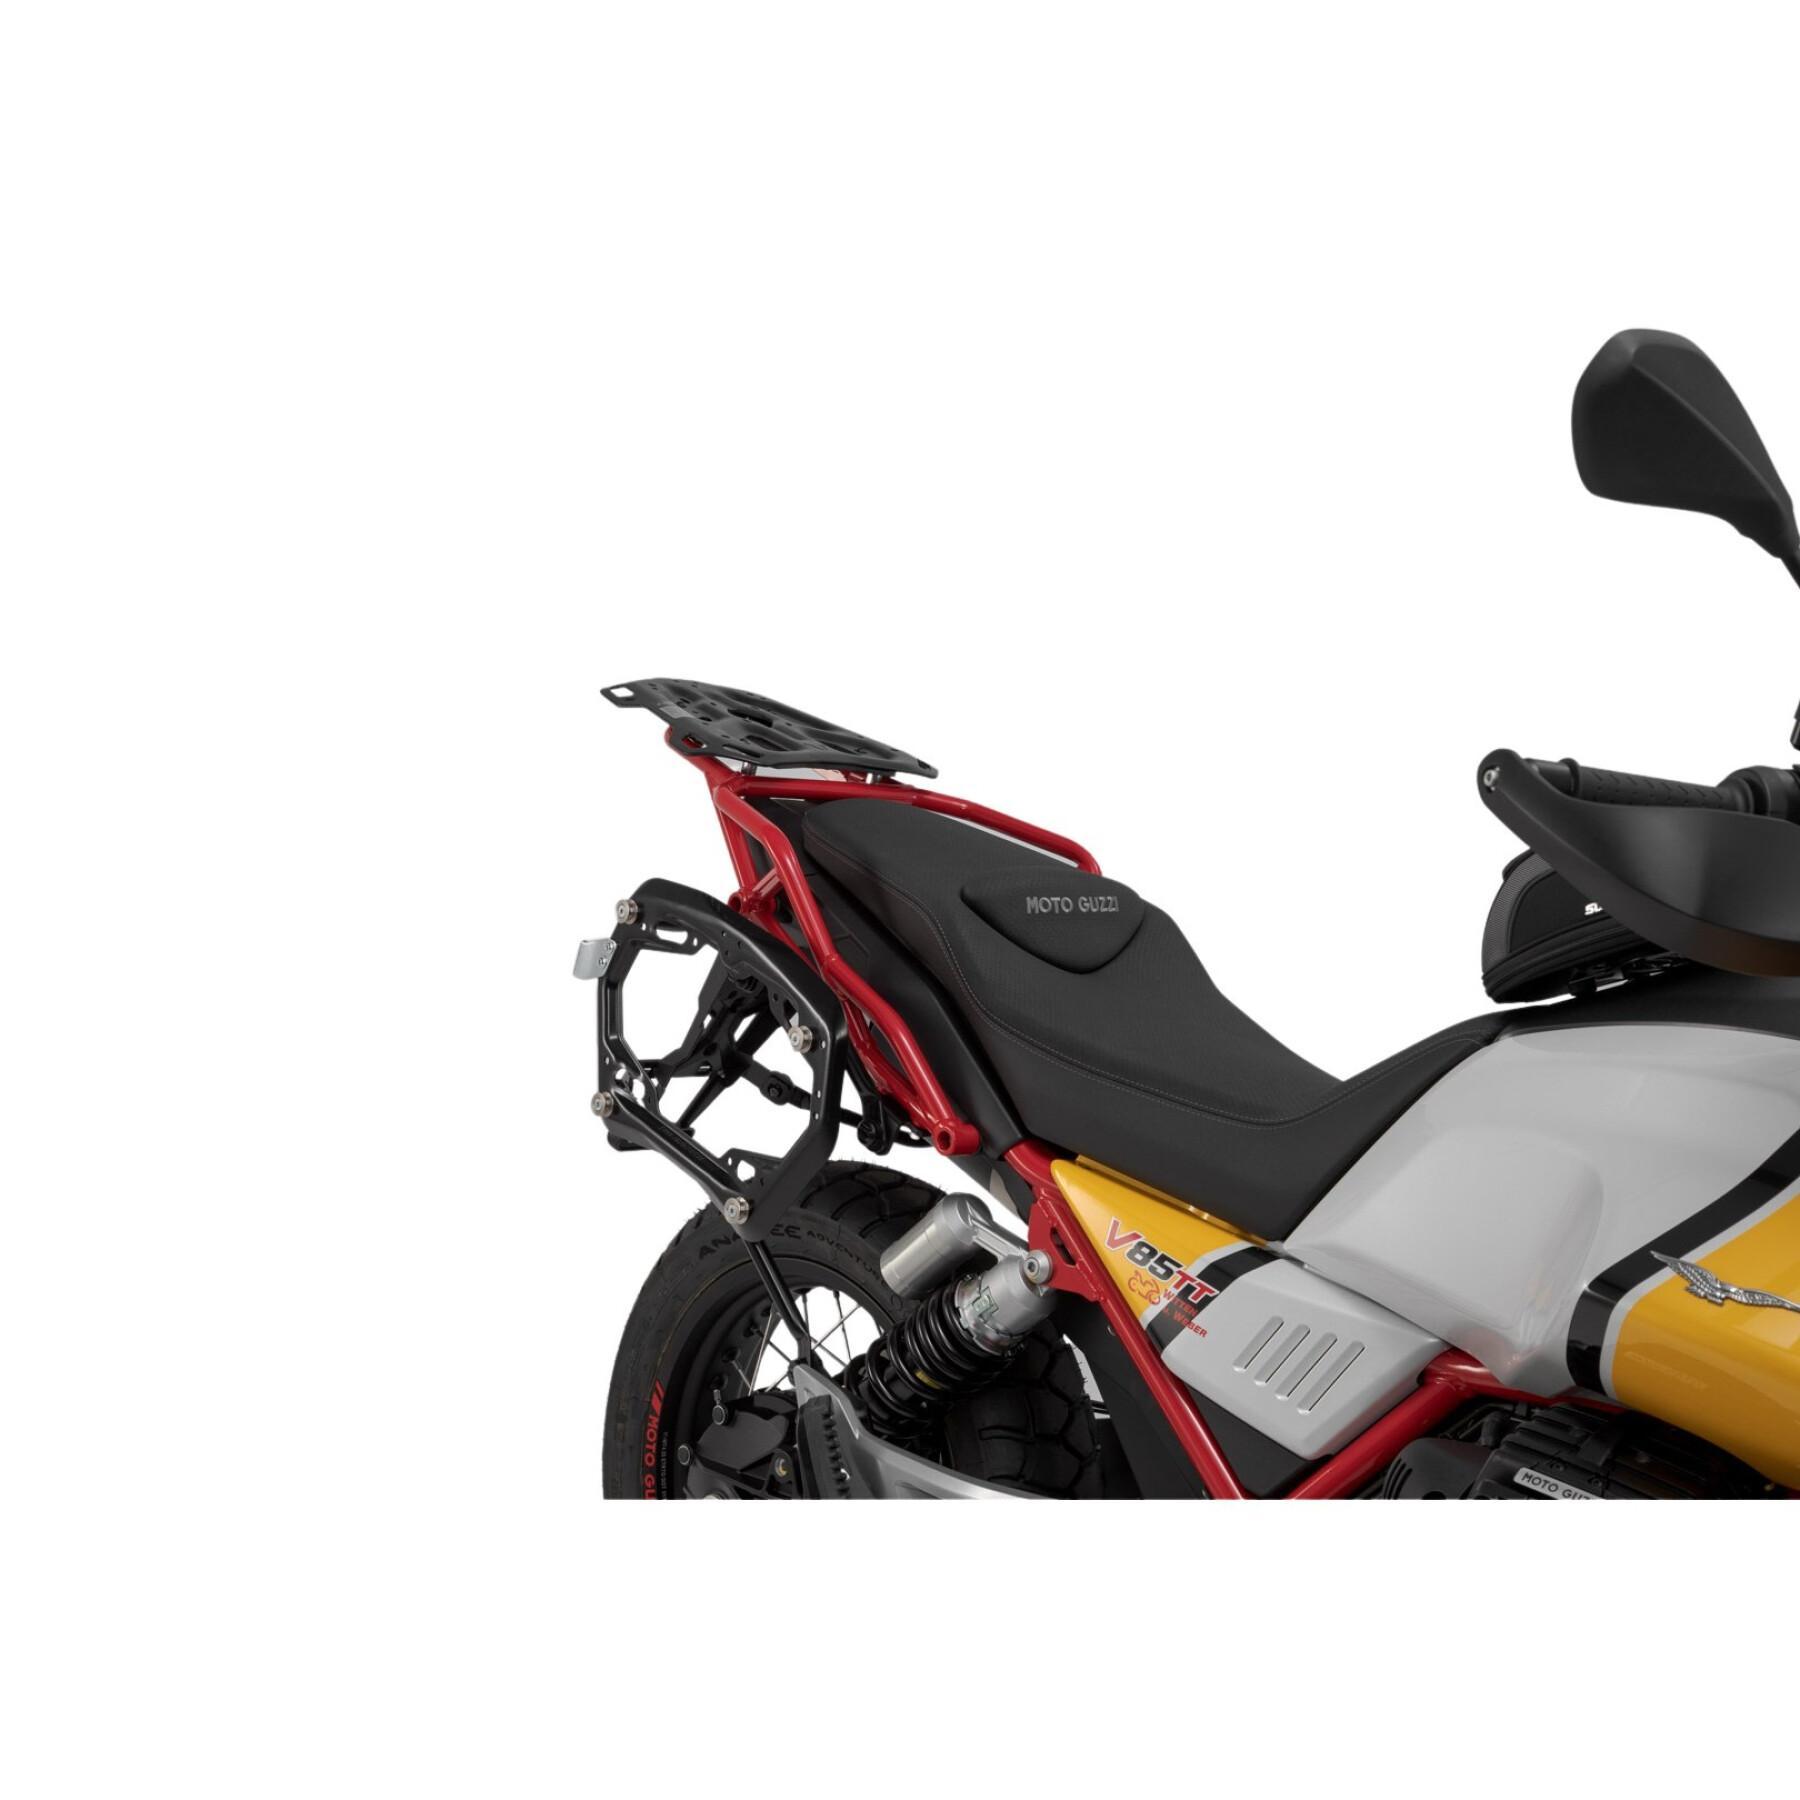 Soporte de la maleta lateral de la moto Sw-Motech Pro. Moto Guzzi V85 Tt (19-)